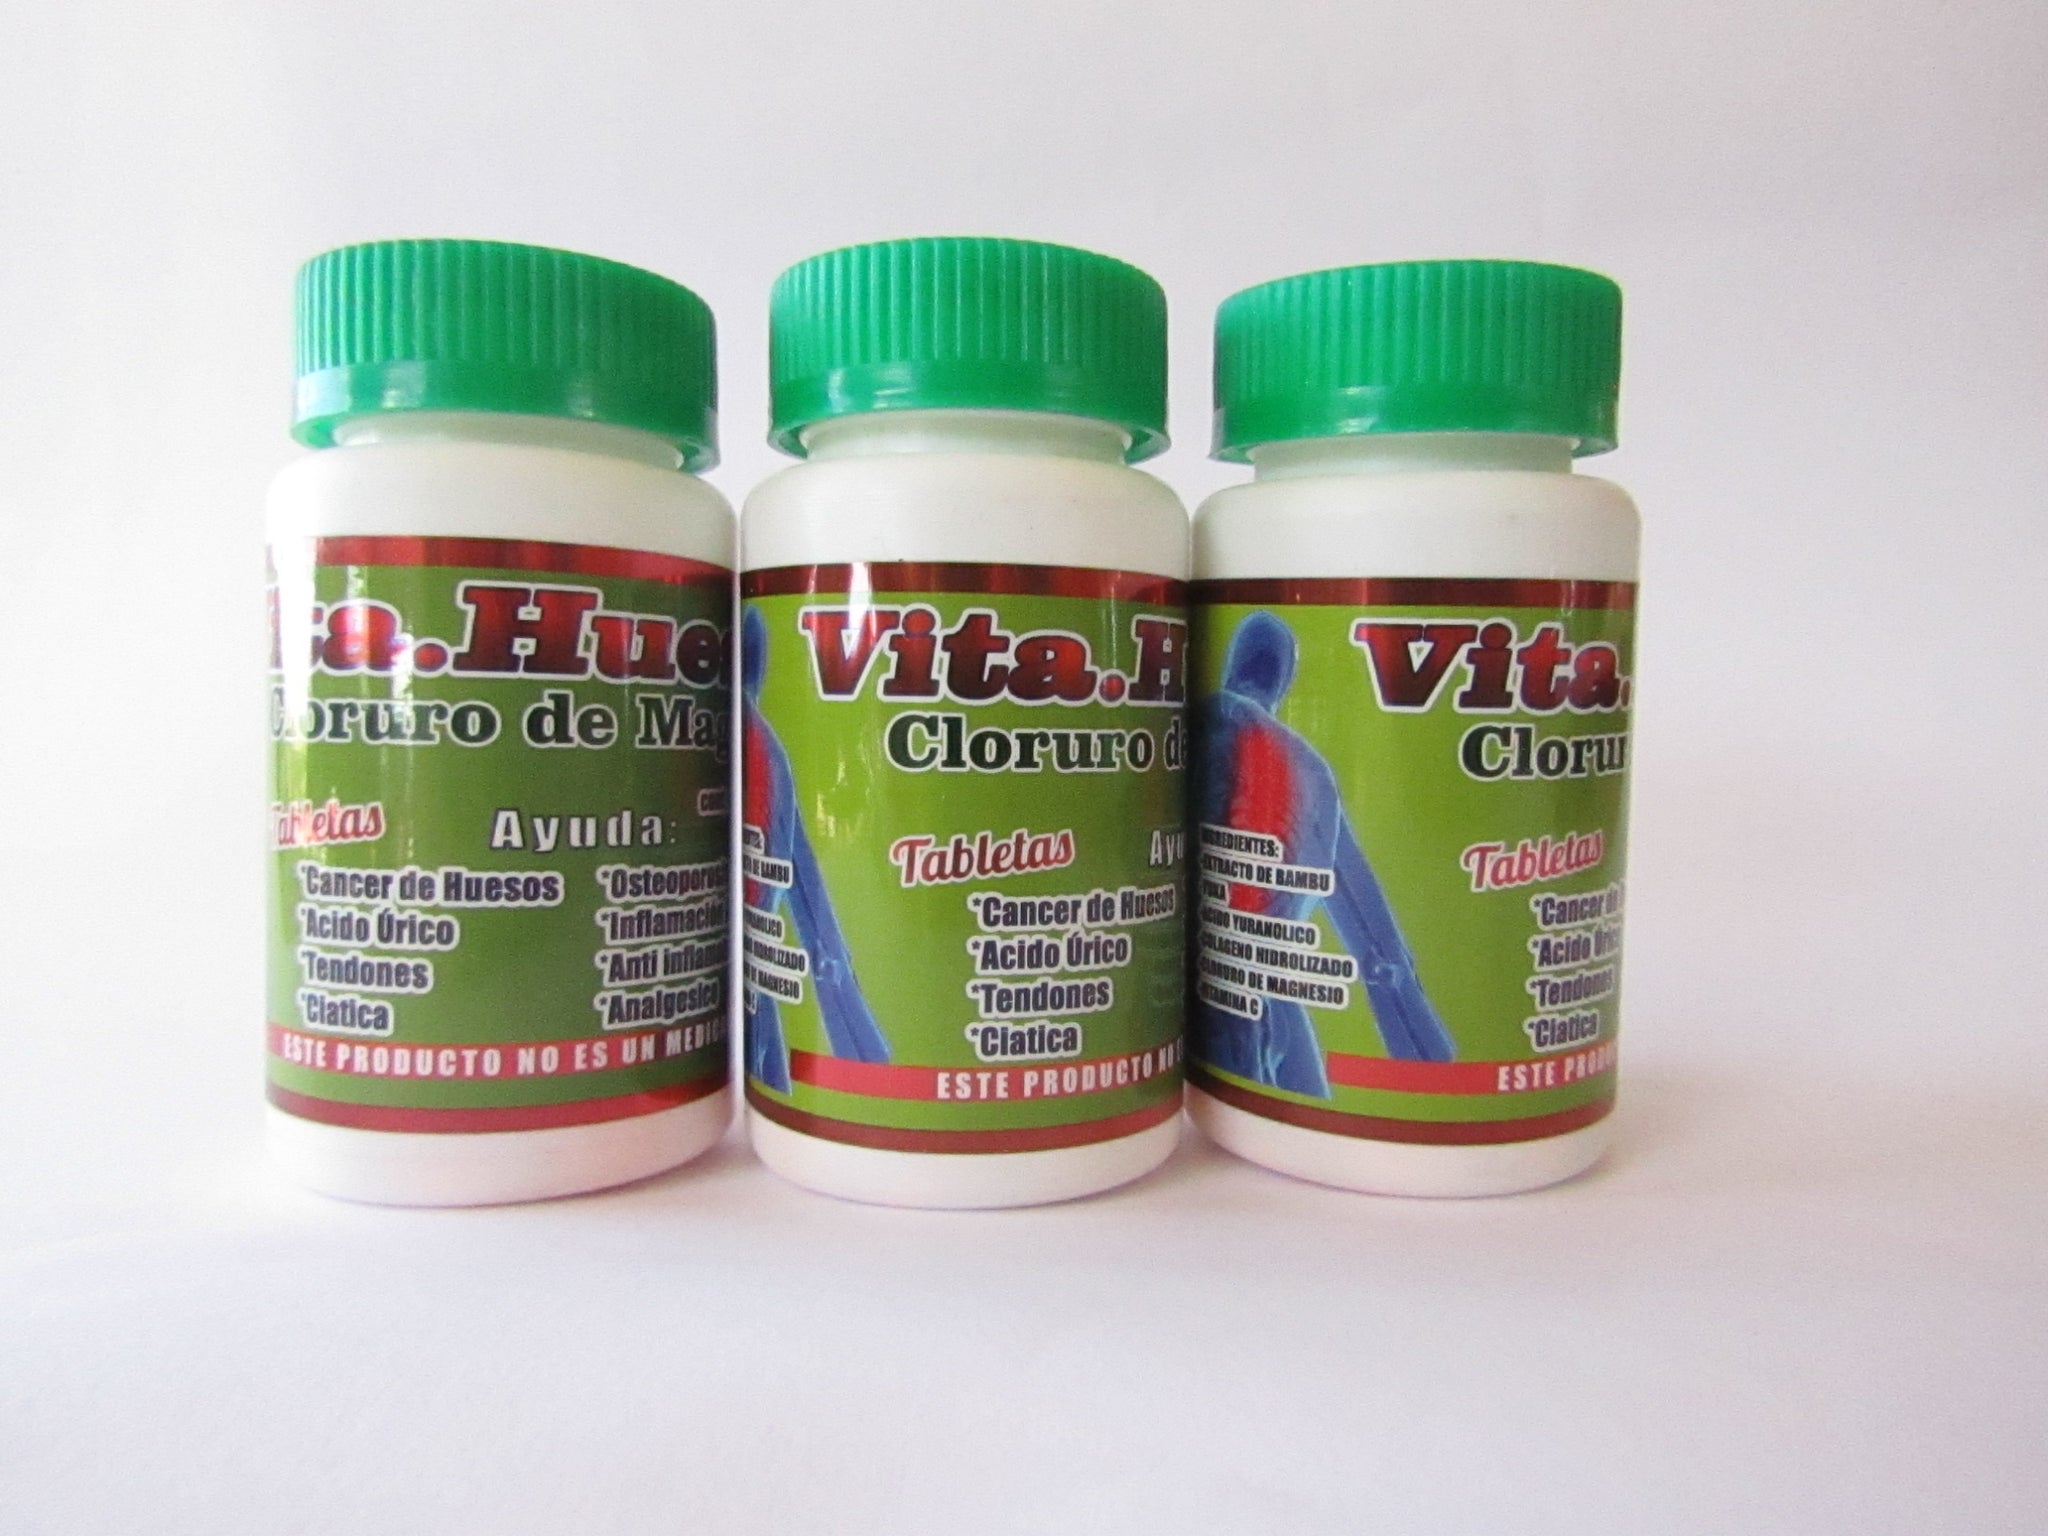 VitaHuesos antirheumatic anti-inflammatory of Arthritis. 60 tablets. 3 bottles